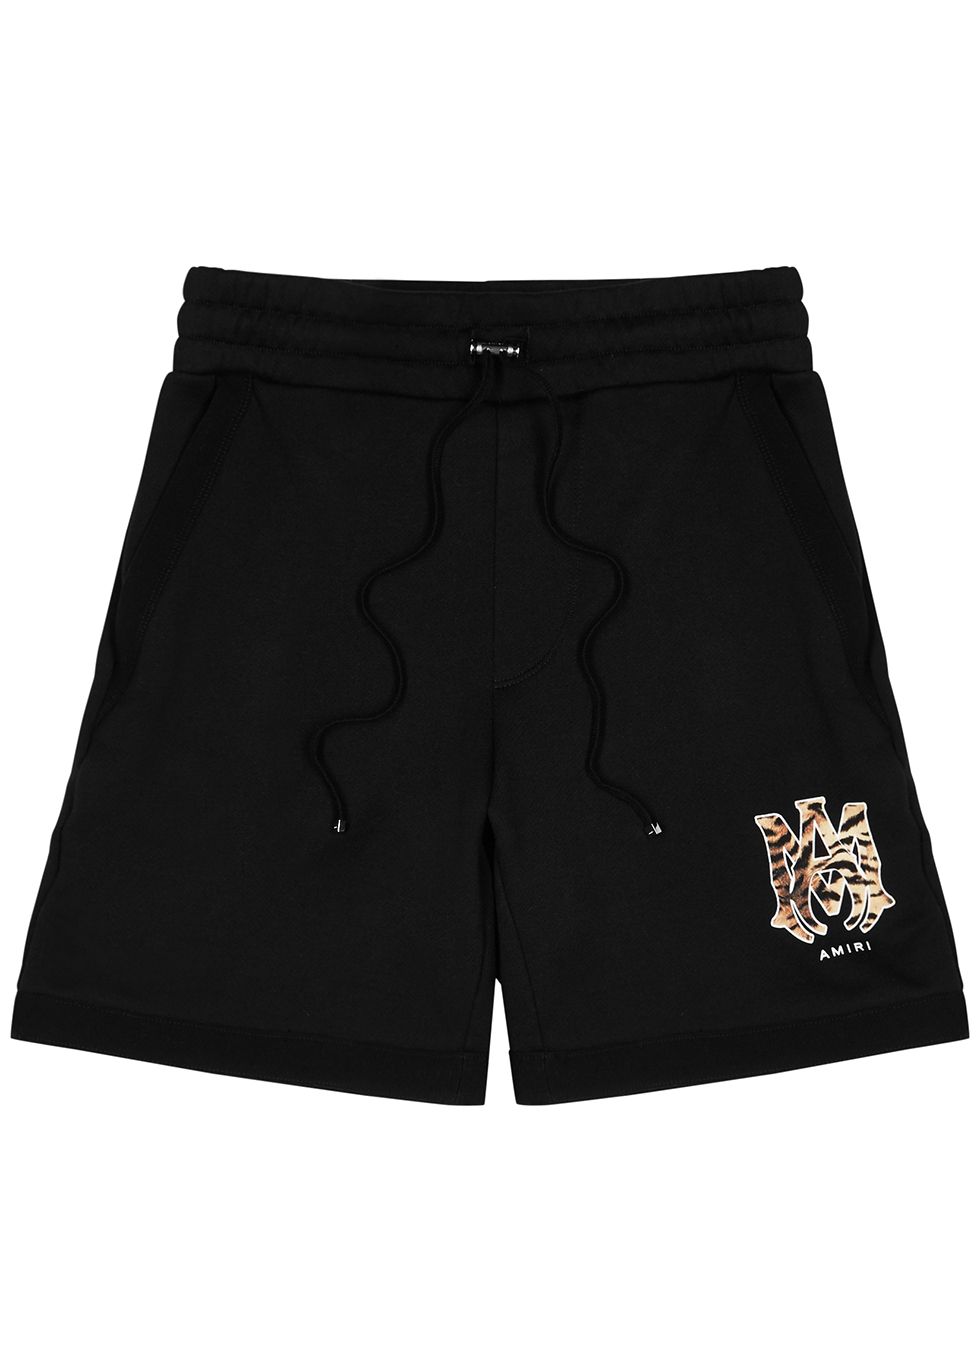 Black logo cotton shorts